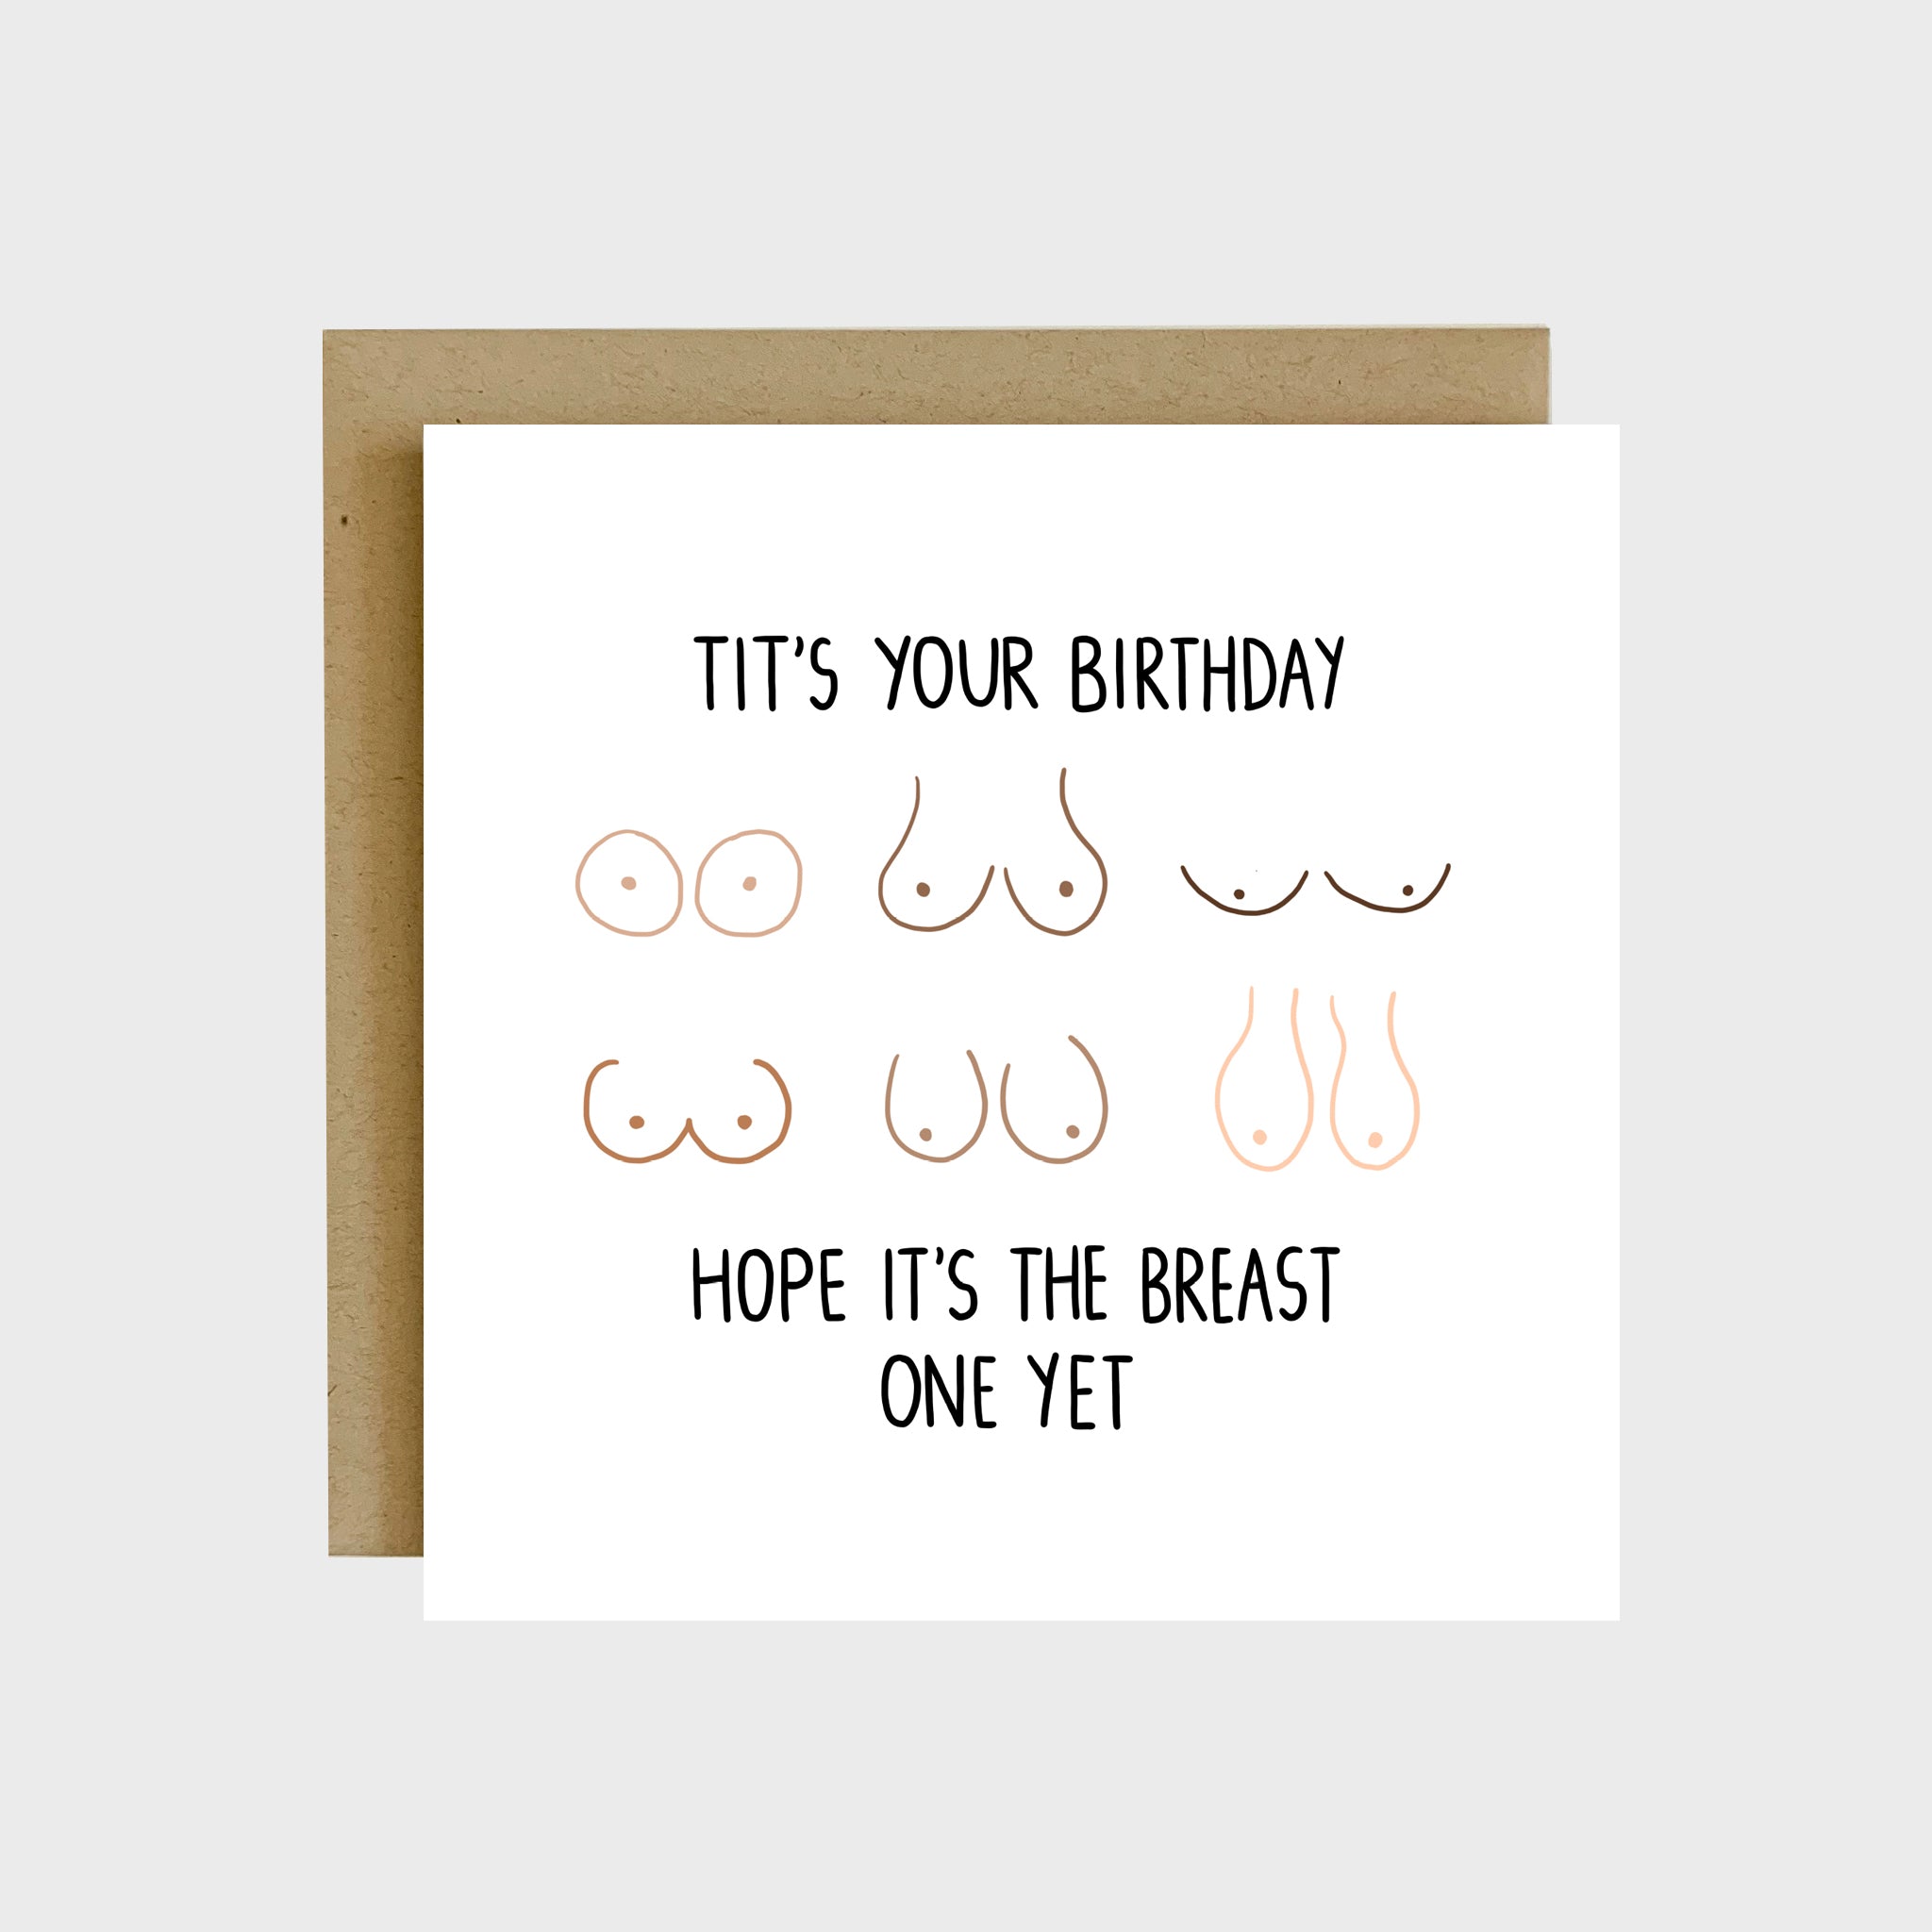 tit's your birthday pun greeting card